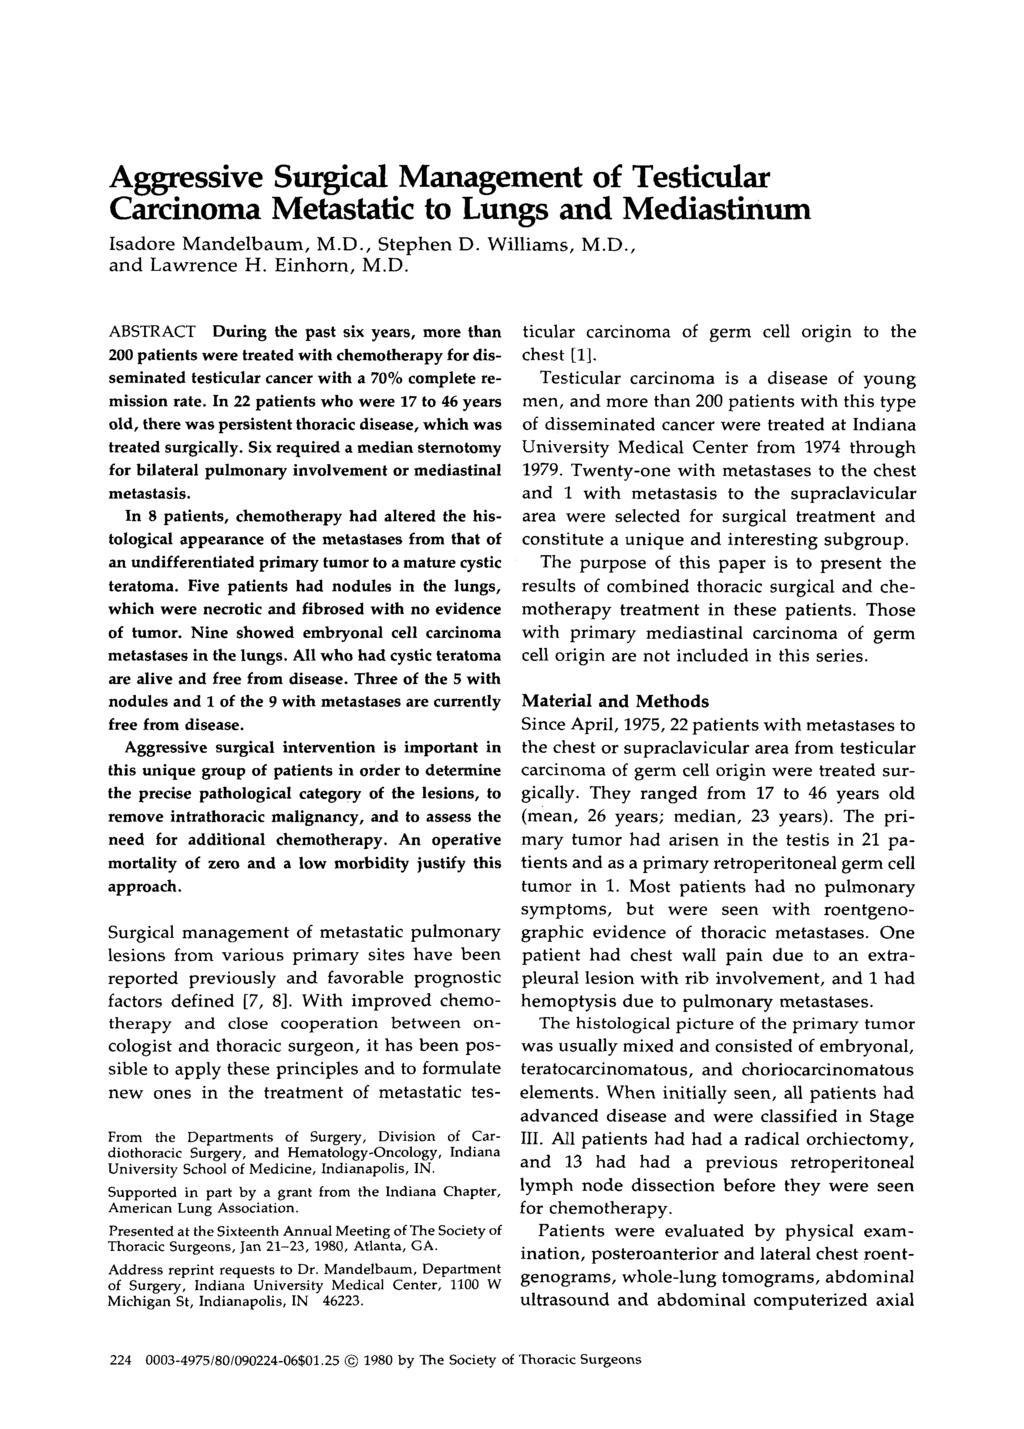 Aggressive Slurgical Management of Testicular Carcinoma Metastatic to Lungs and Mediastinurn Isadore Mandelbaum, M.D.